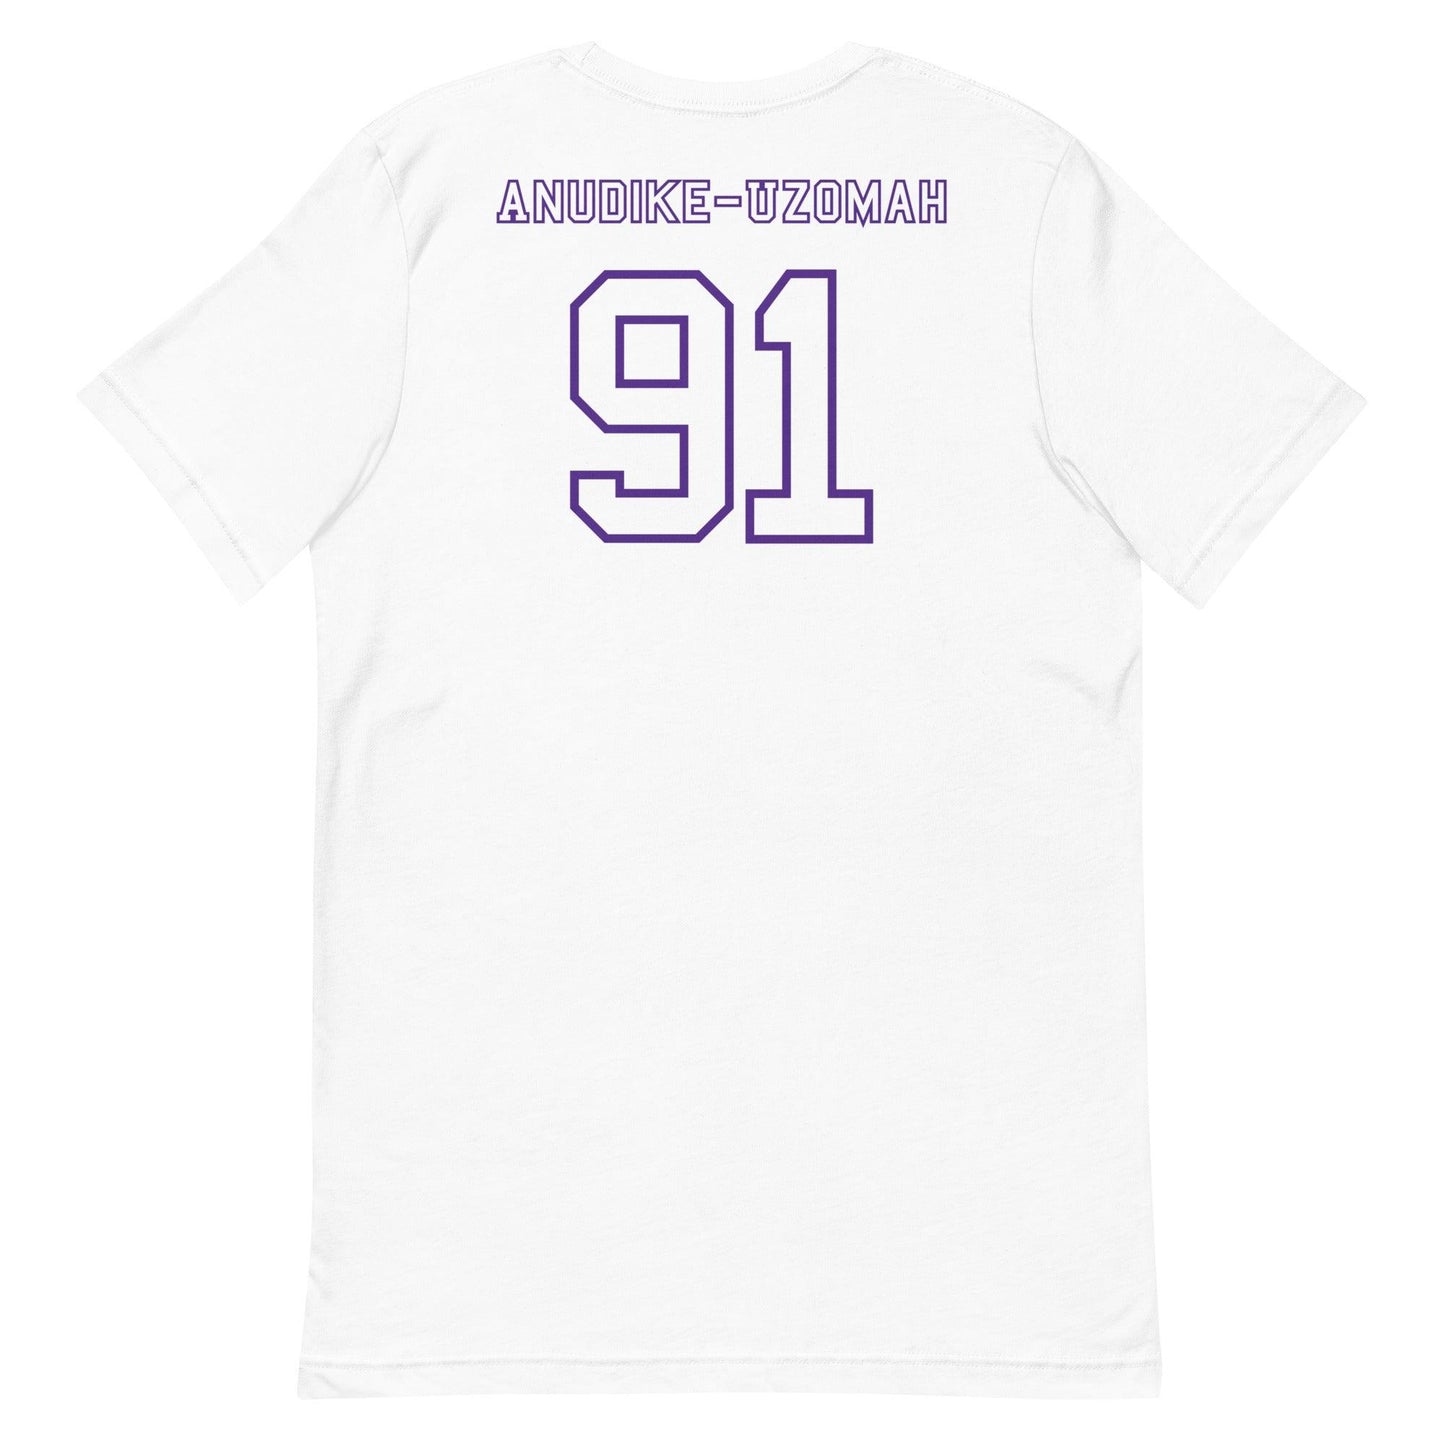 Felix Anudike-Uzomah "Jersey" t-shirt - Fan Arch